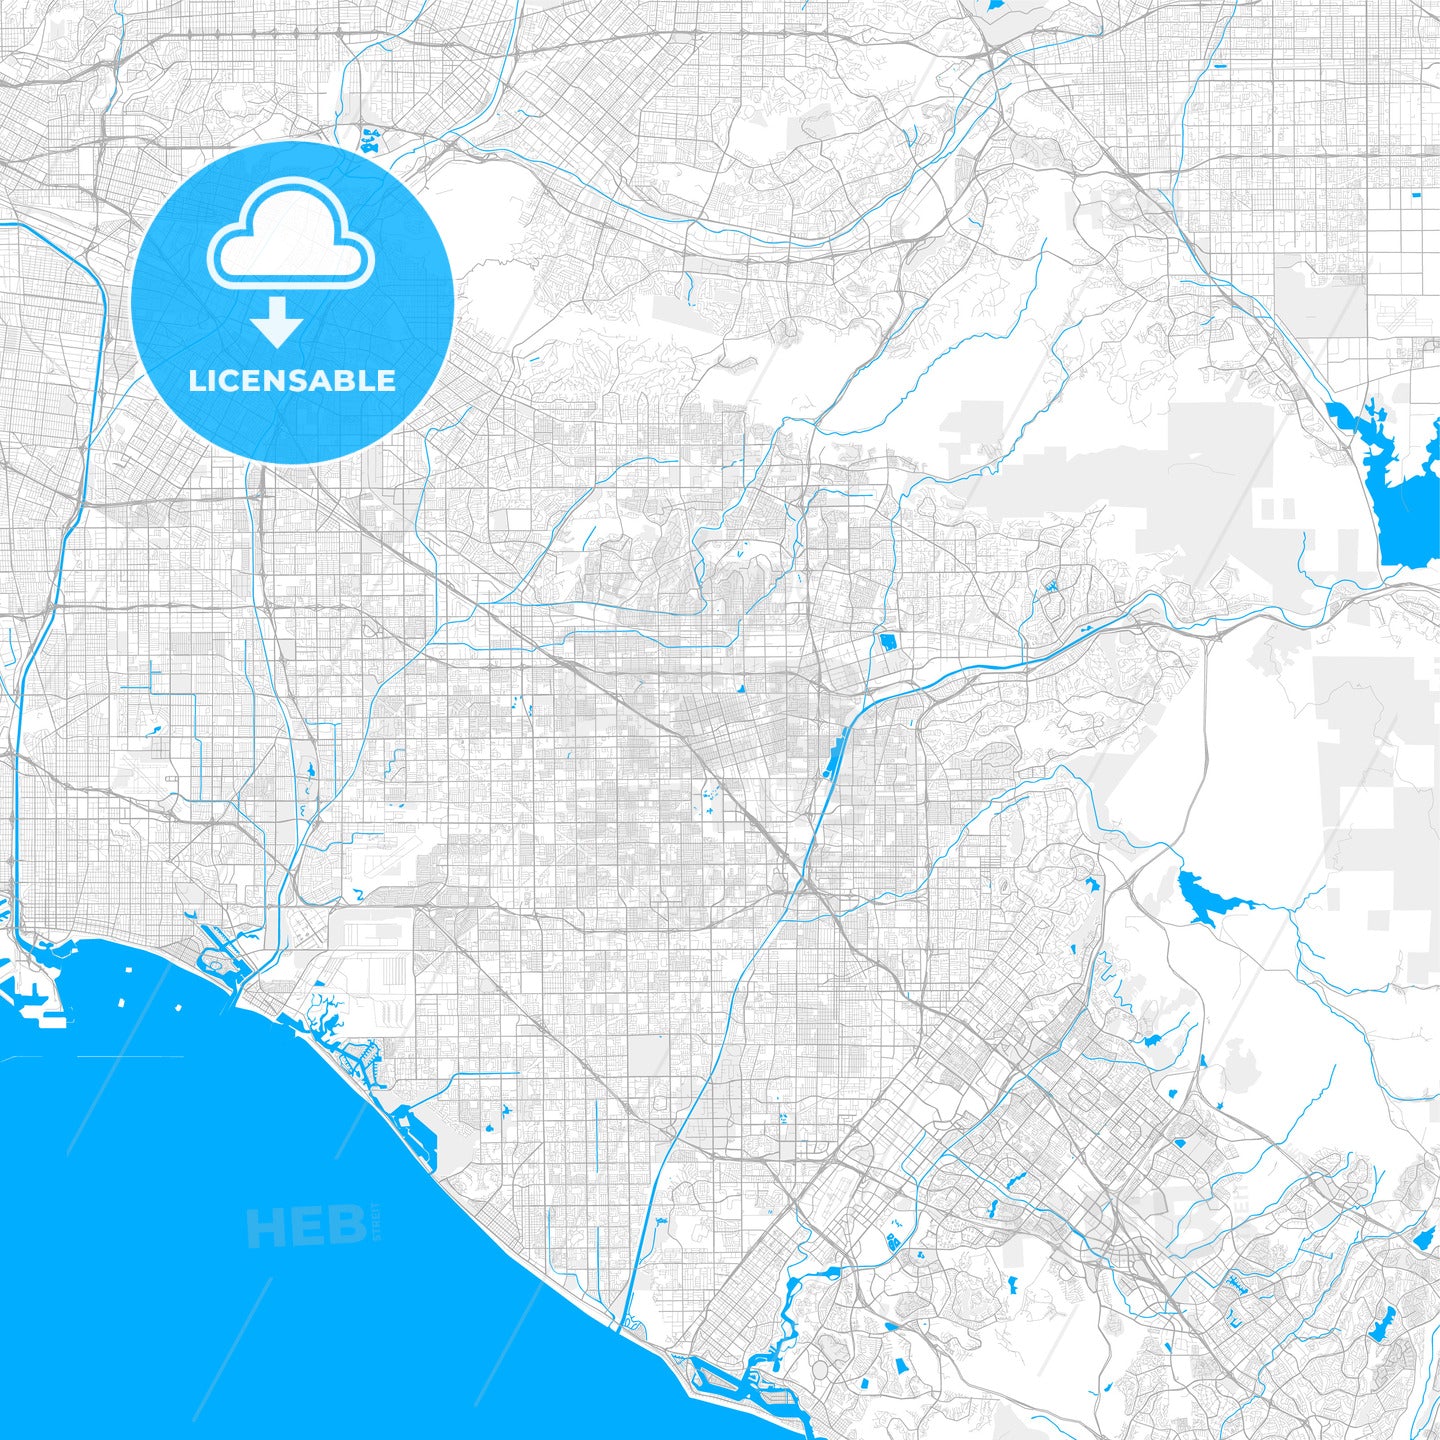 Rich detailed vector map of Anaheim, California, U.S.A.